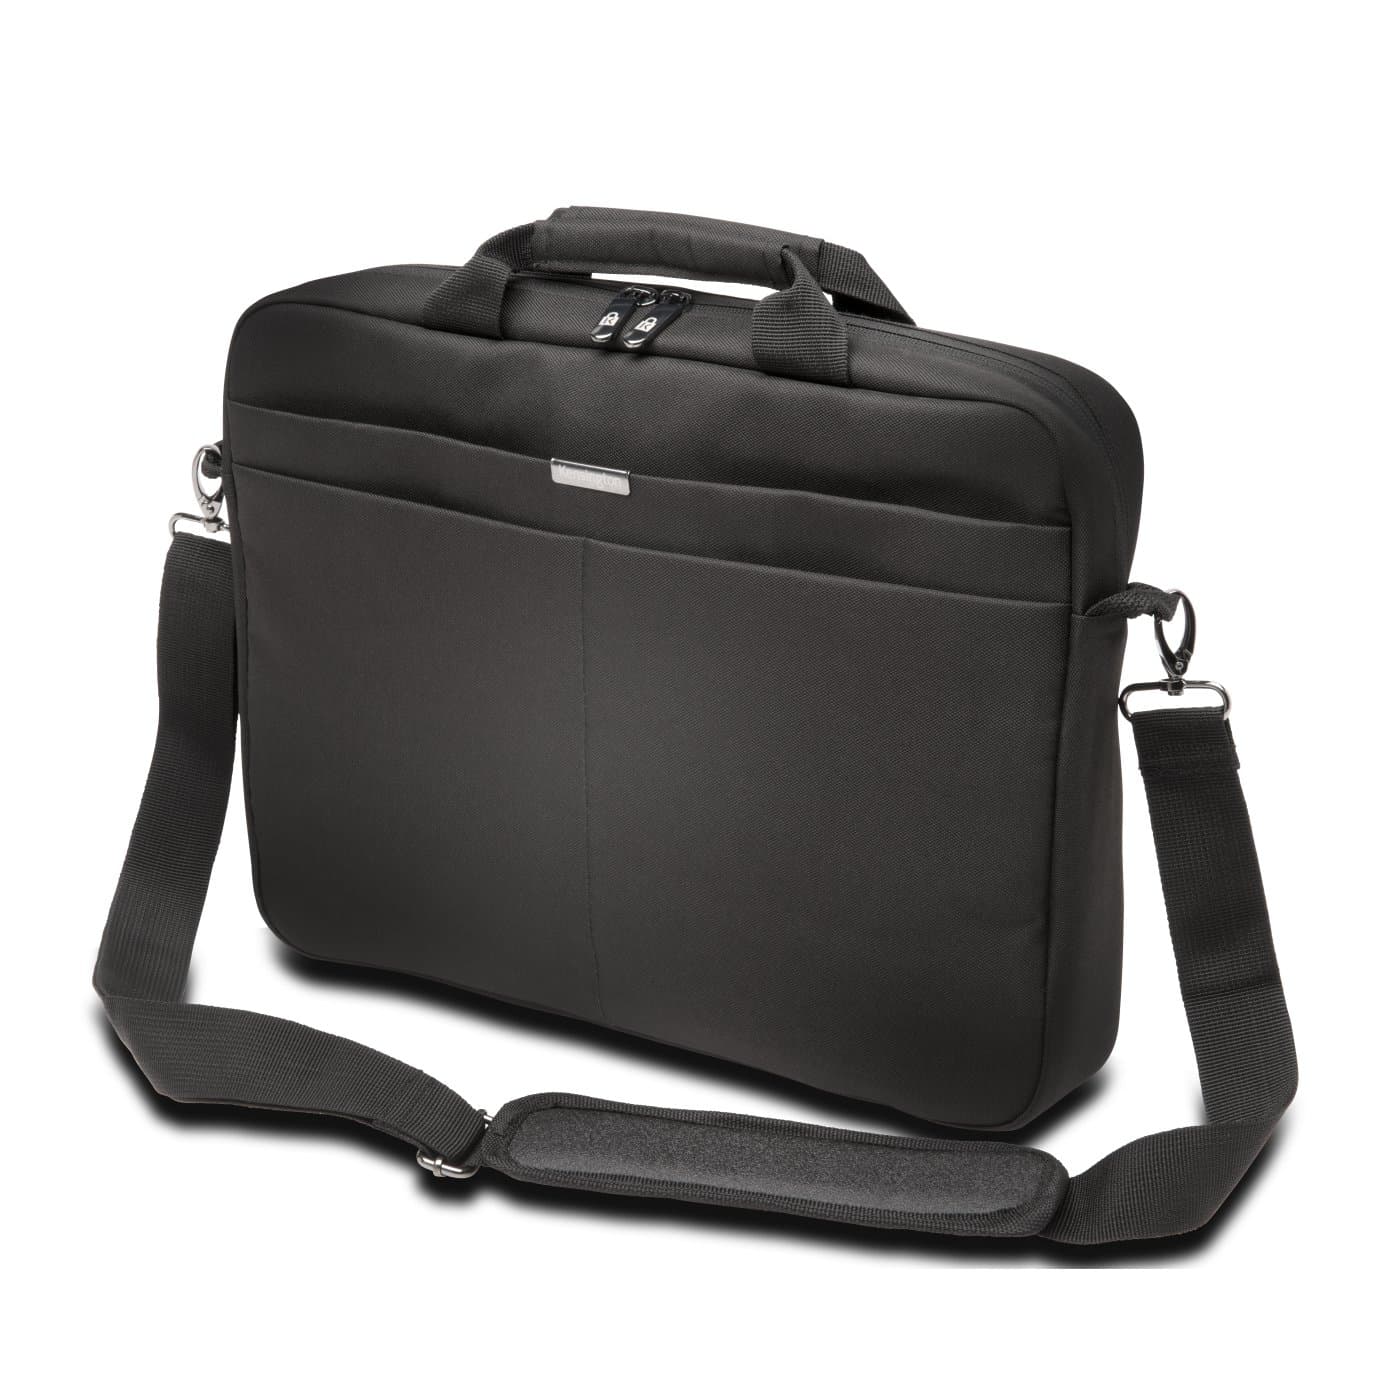 LS240 Laptop Carrying Case K62618WW